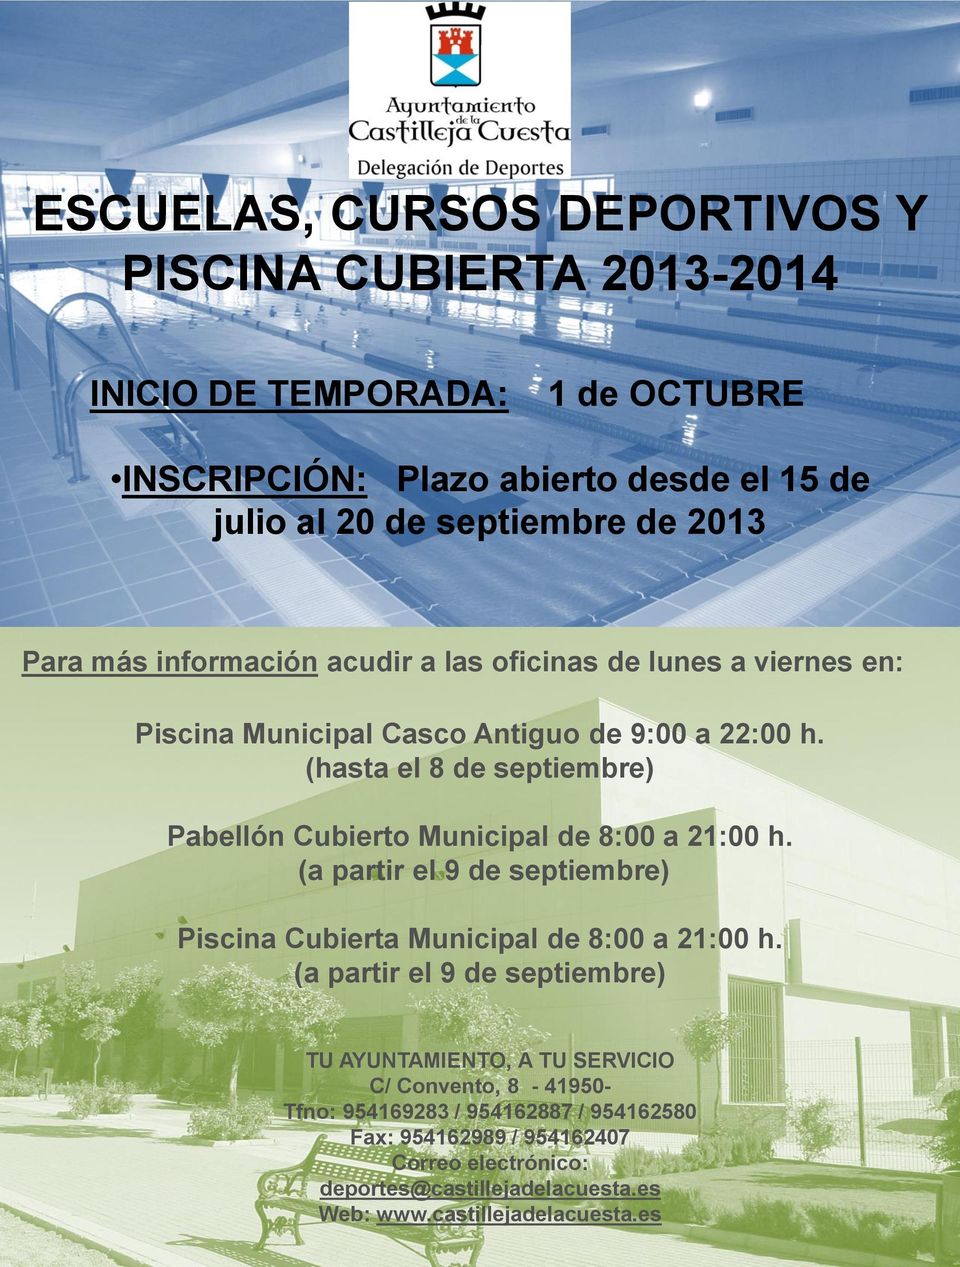 (hasta el 8 de septiembre) Pabellón Cubierto Municipal de 8:00 a 21:00 h. (a partir el 9 de septiembre) Piscina Cubierta Municipal de 8:00 a 21:00 h.